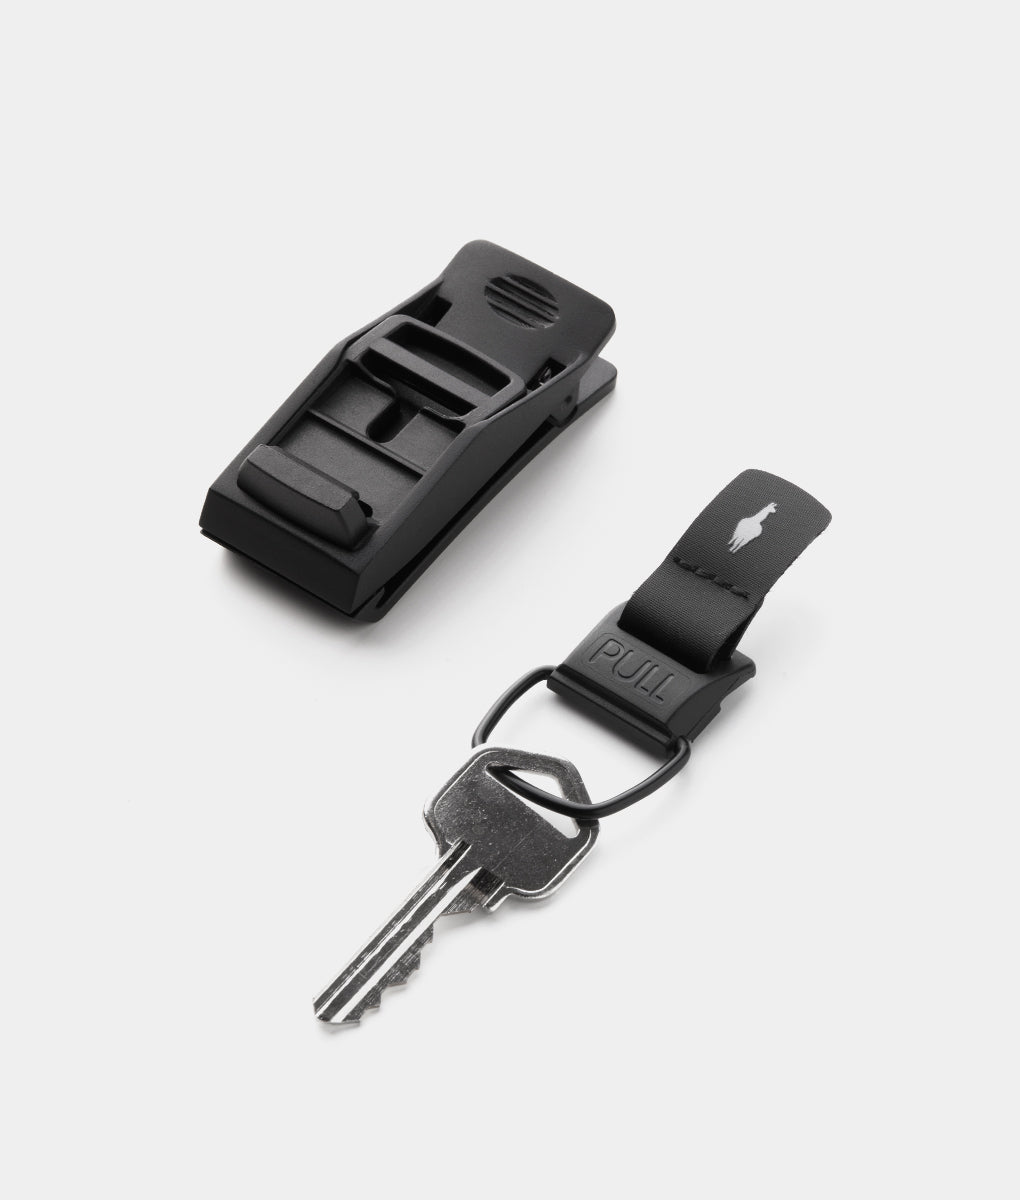 HUB Keychain Kit